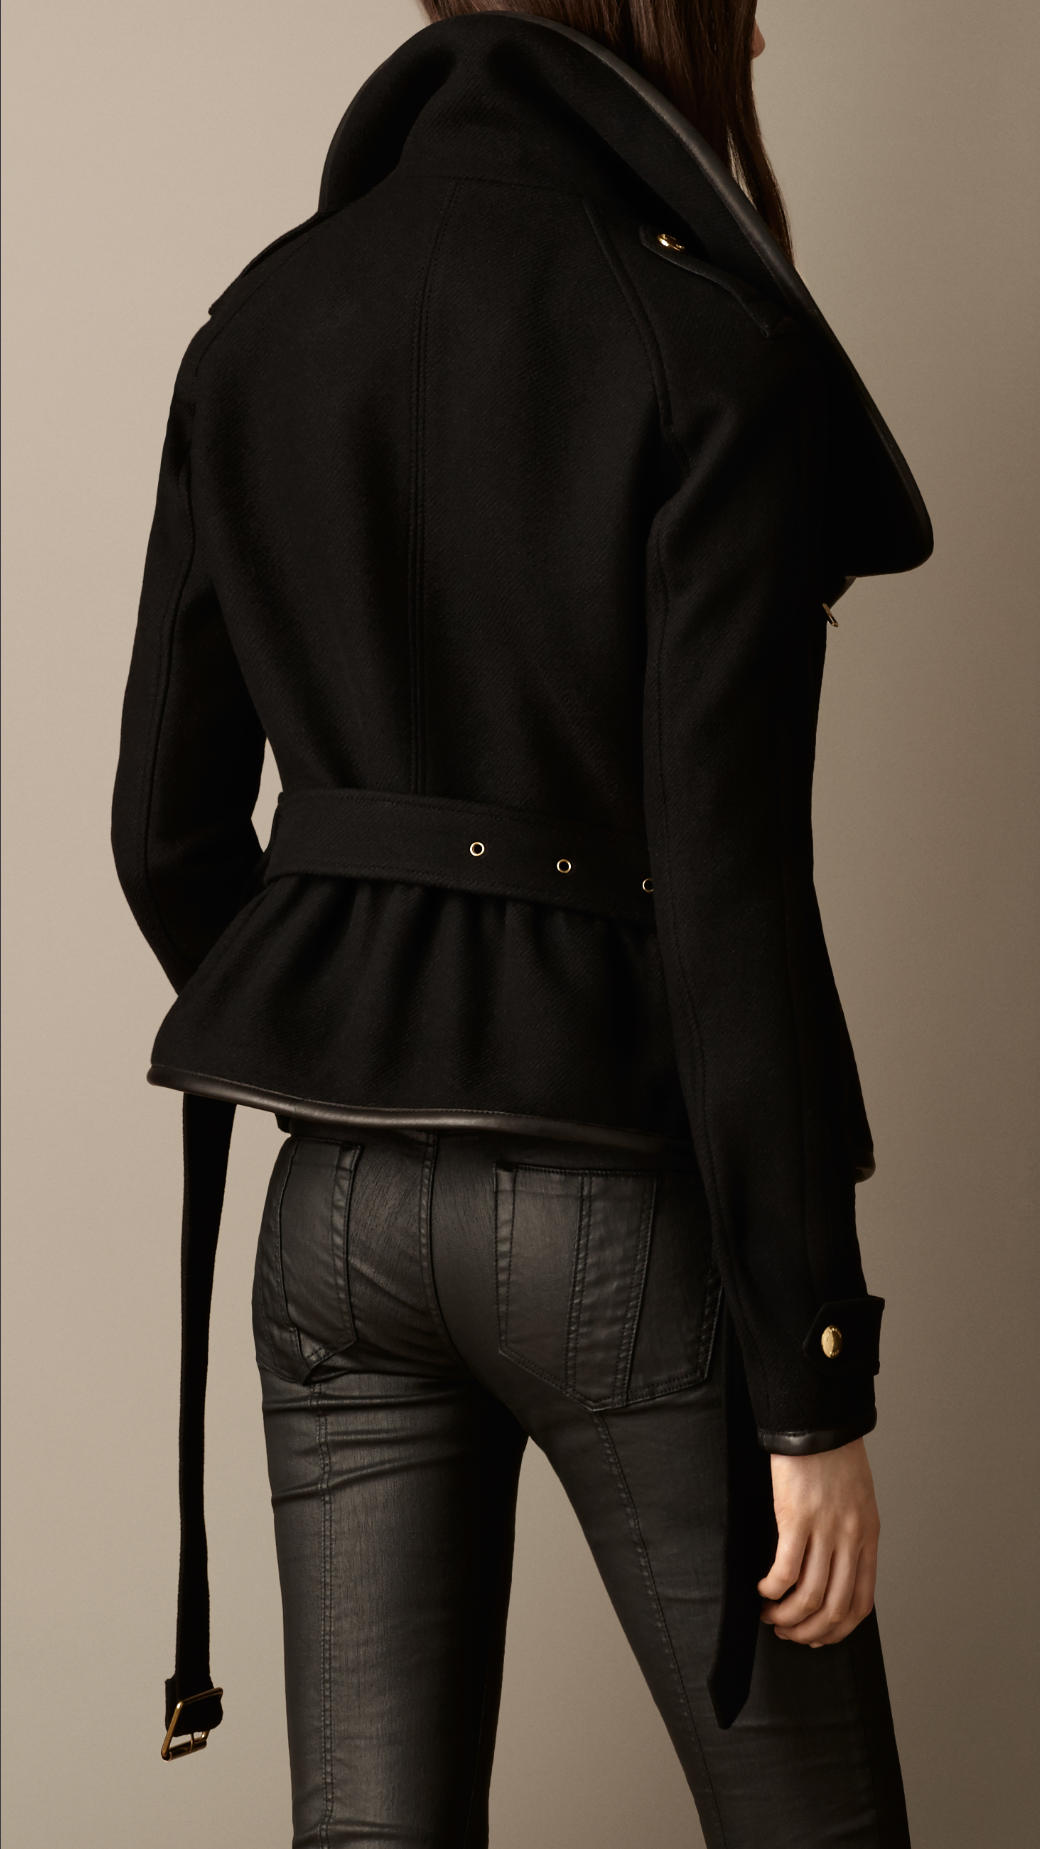 Lyst - Burberry Leather Trim Blanket Wrap Jacket in Black